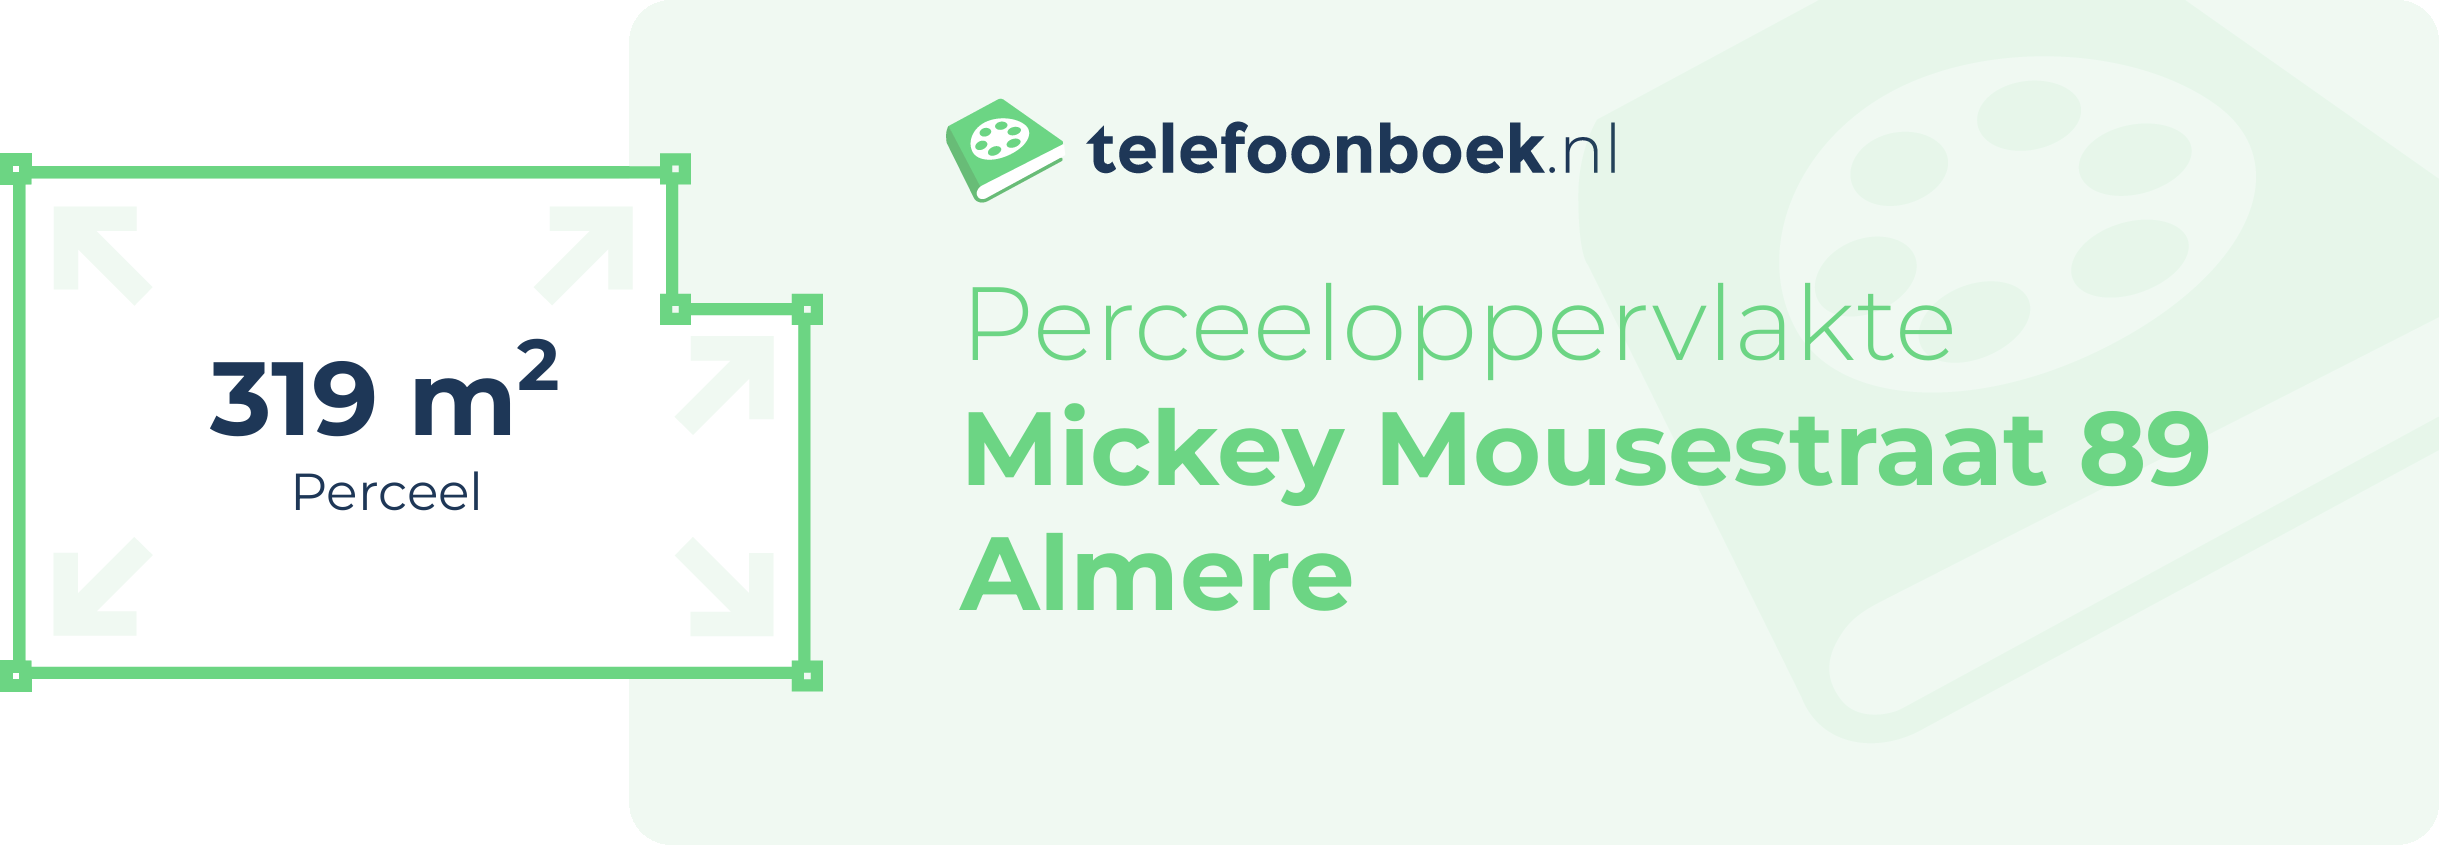 Perceeloppervlakte Mickey Mousestraat 89 Almere